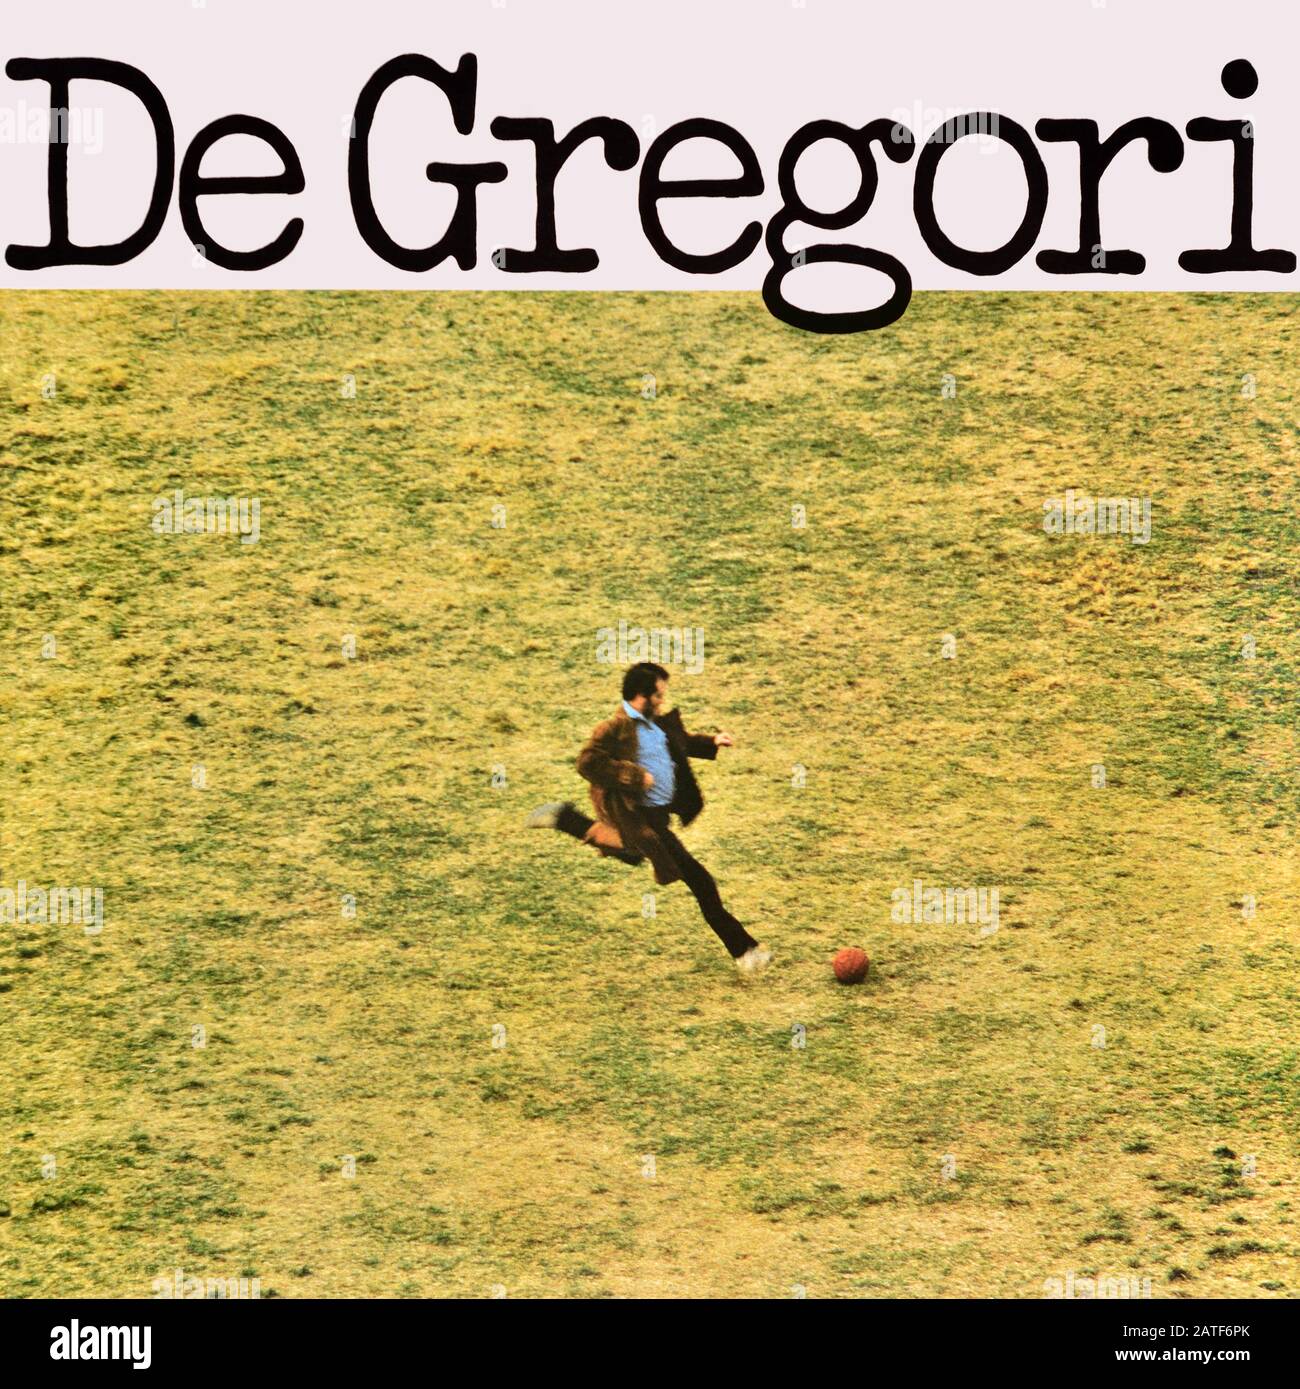 Francesco De Gregori - original vinyl album cover - De Gregori - 1978 Stock Photo